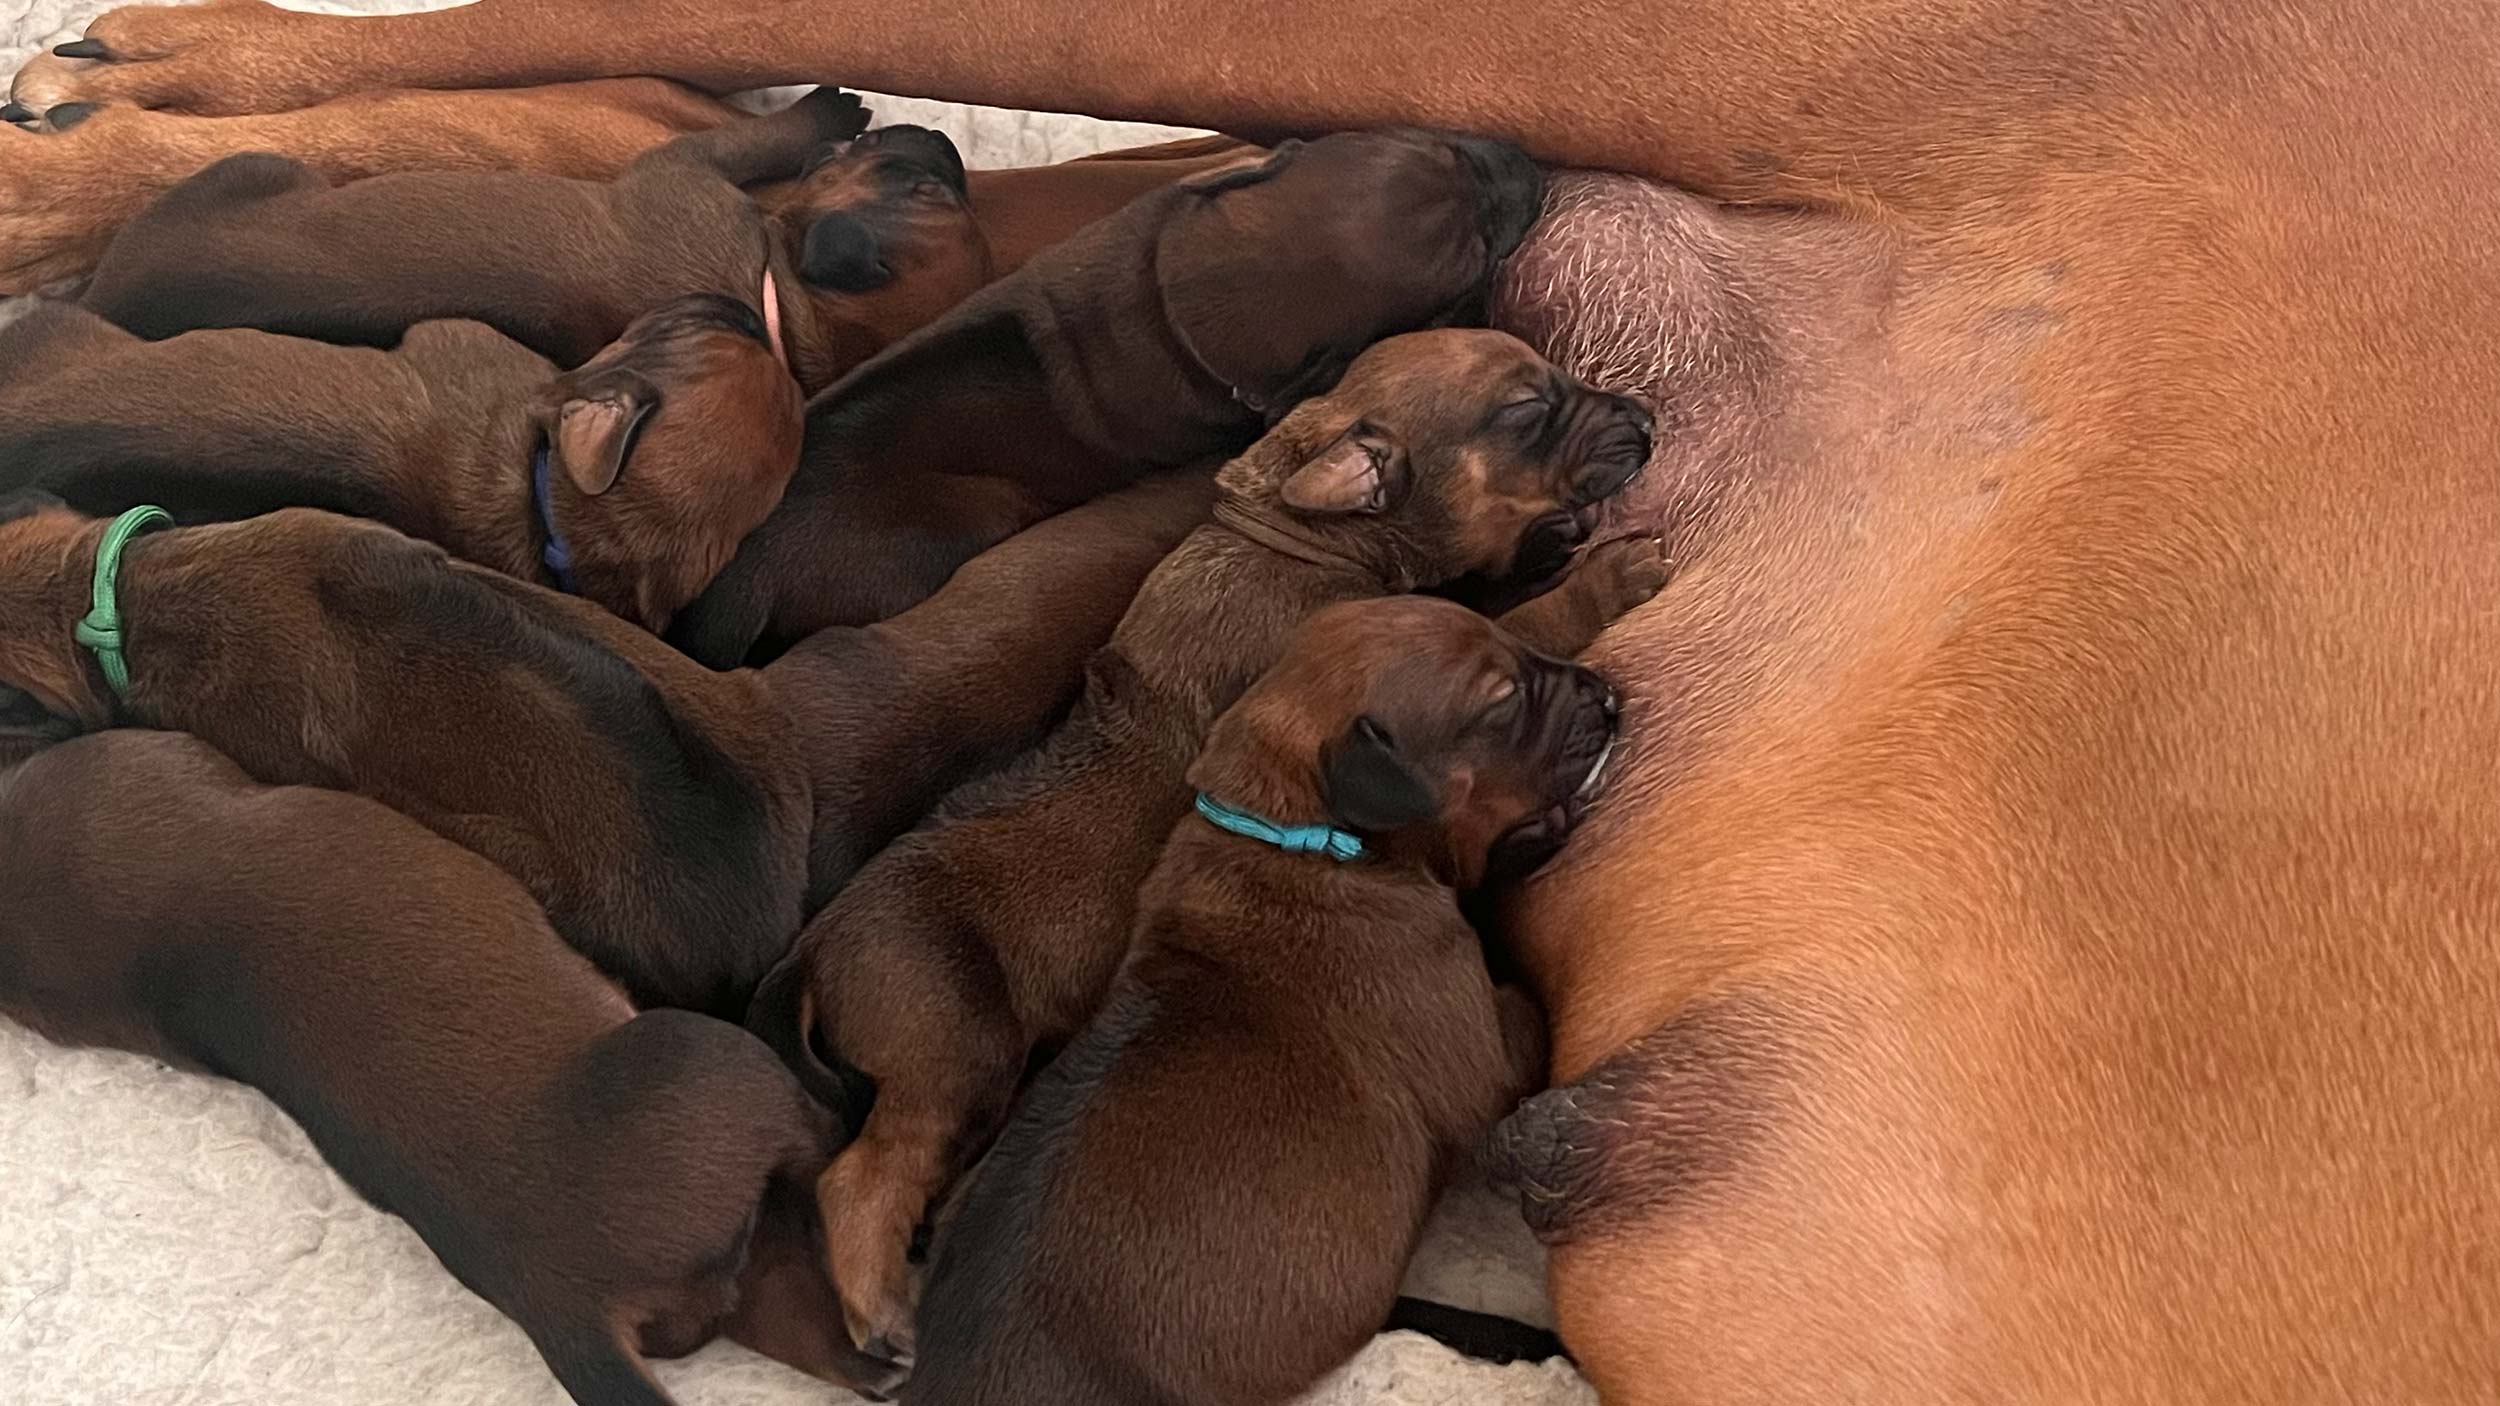 Feeding pups